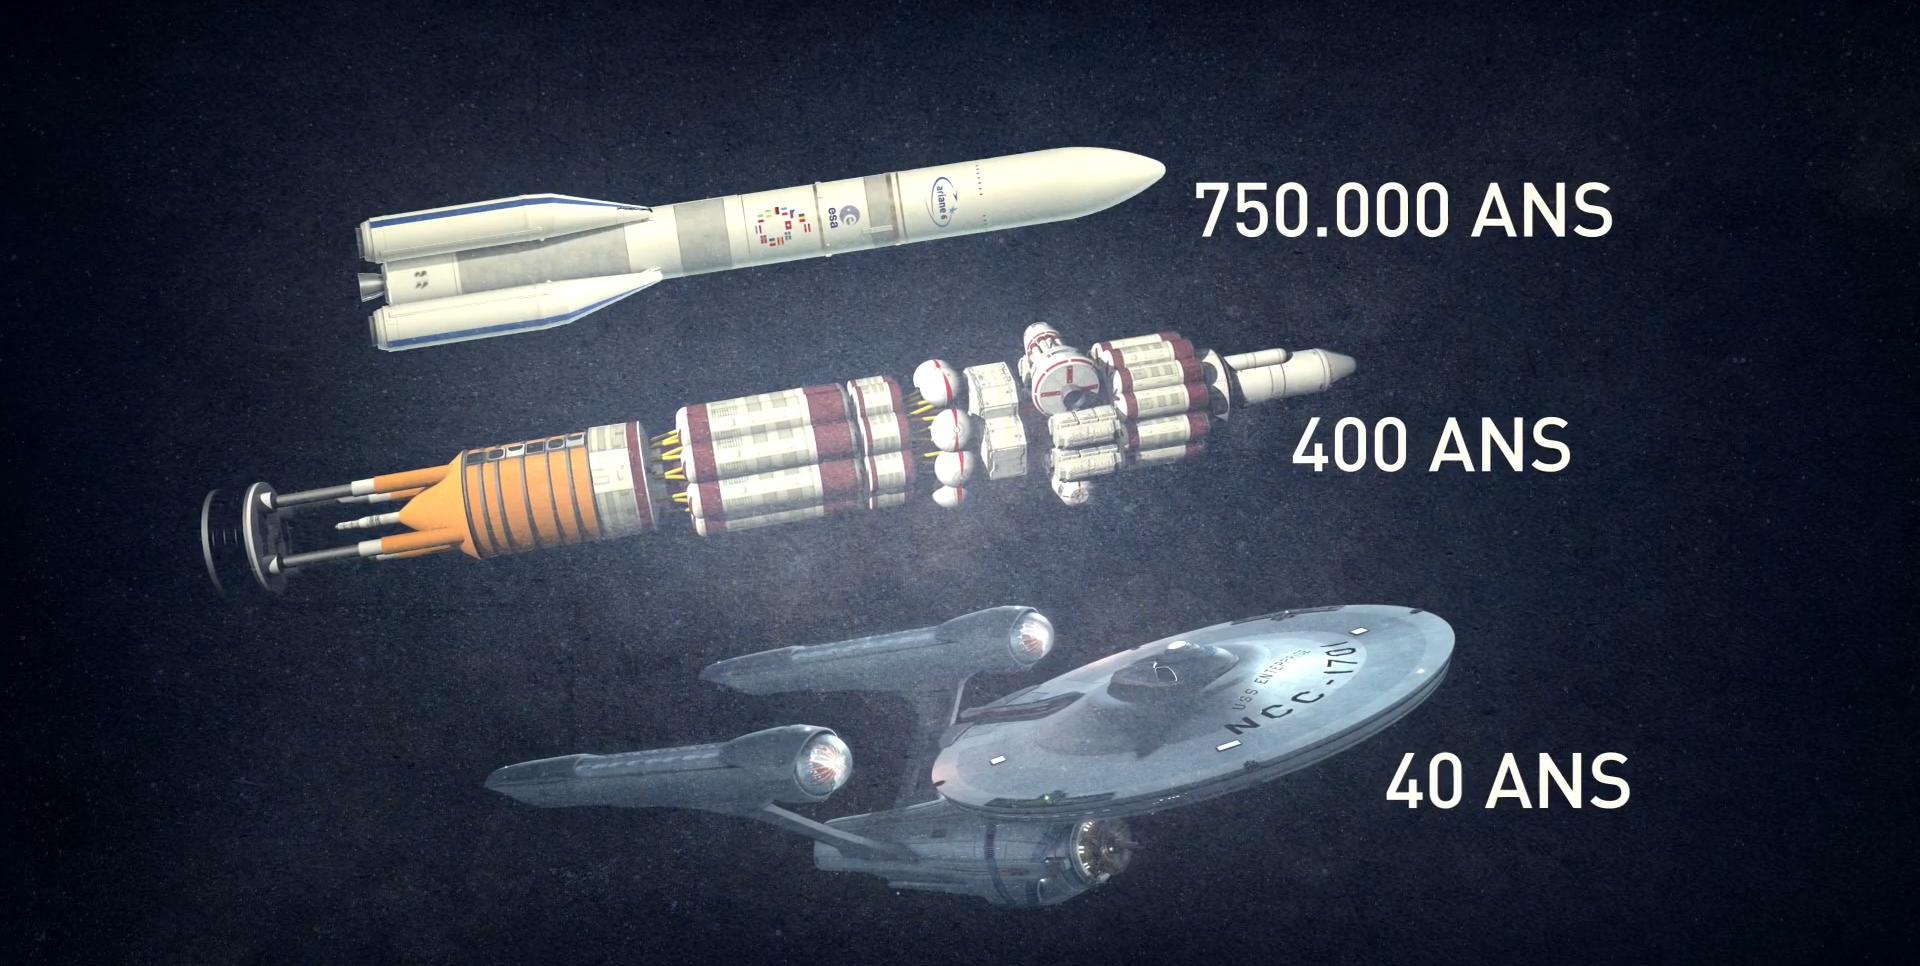 Futures missions spatiales